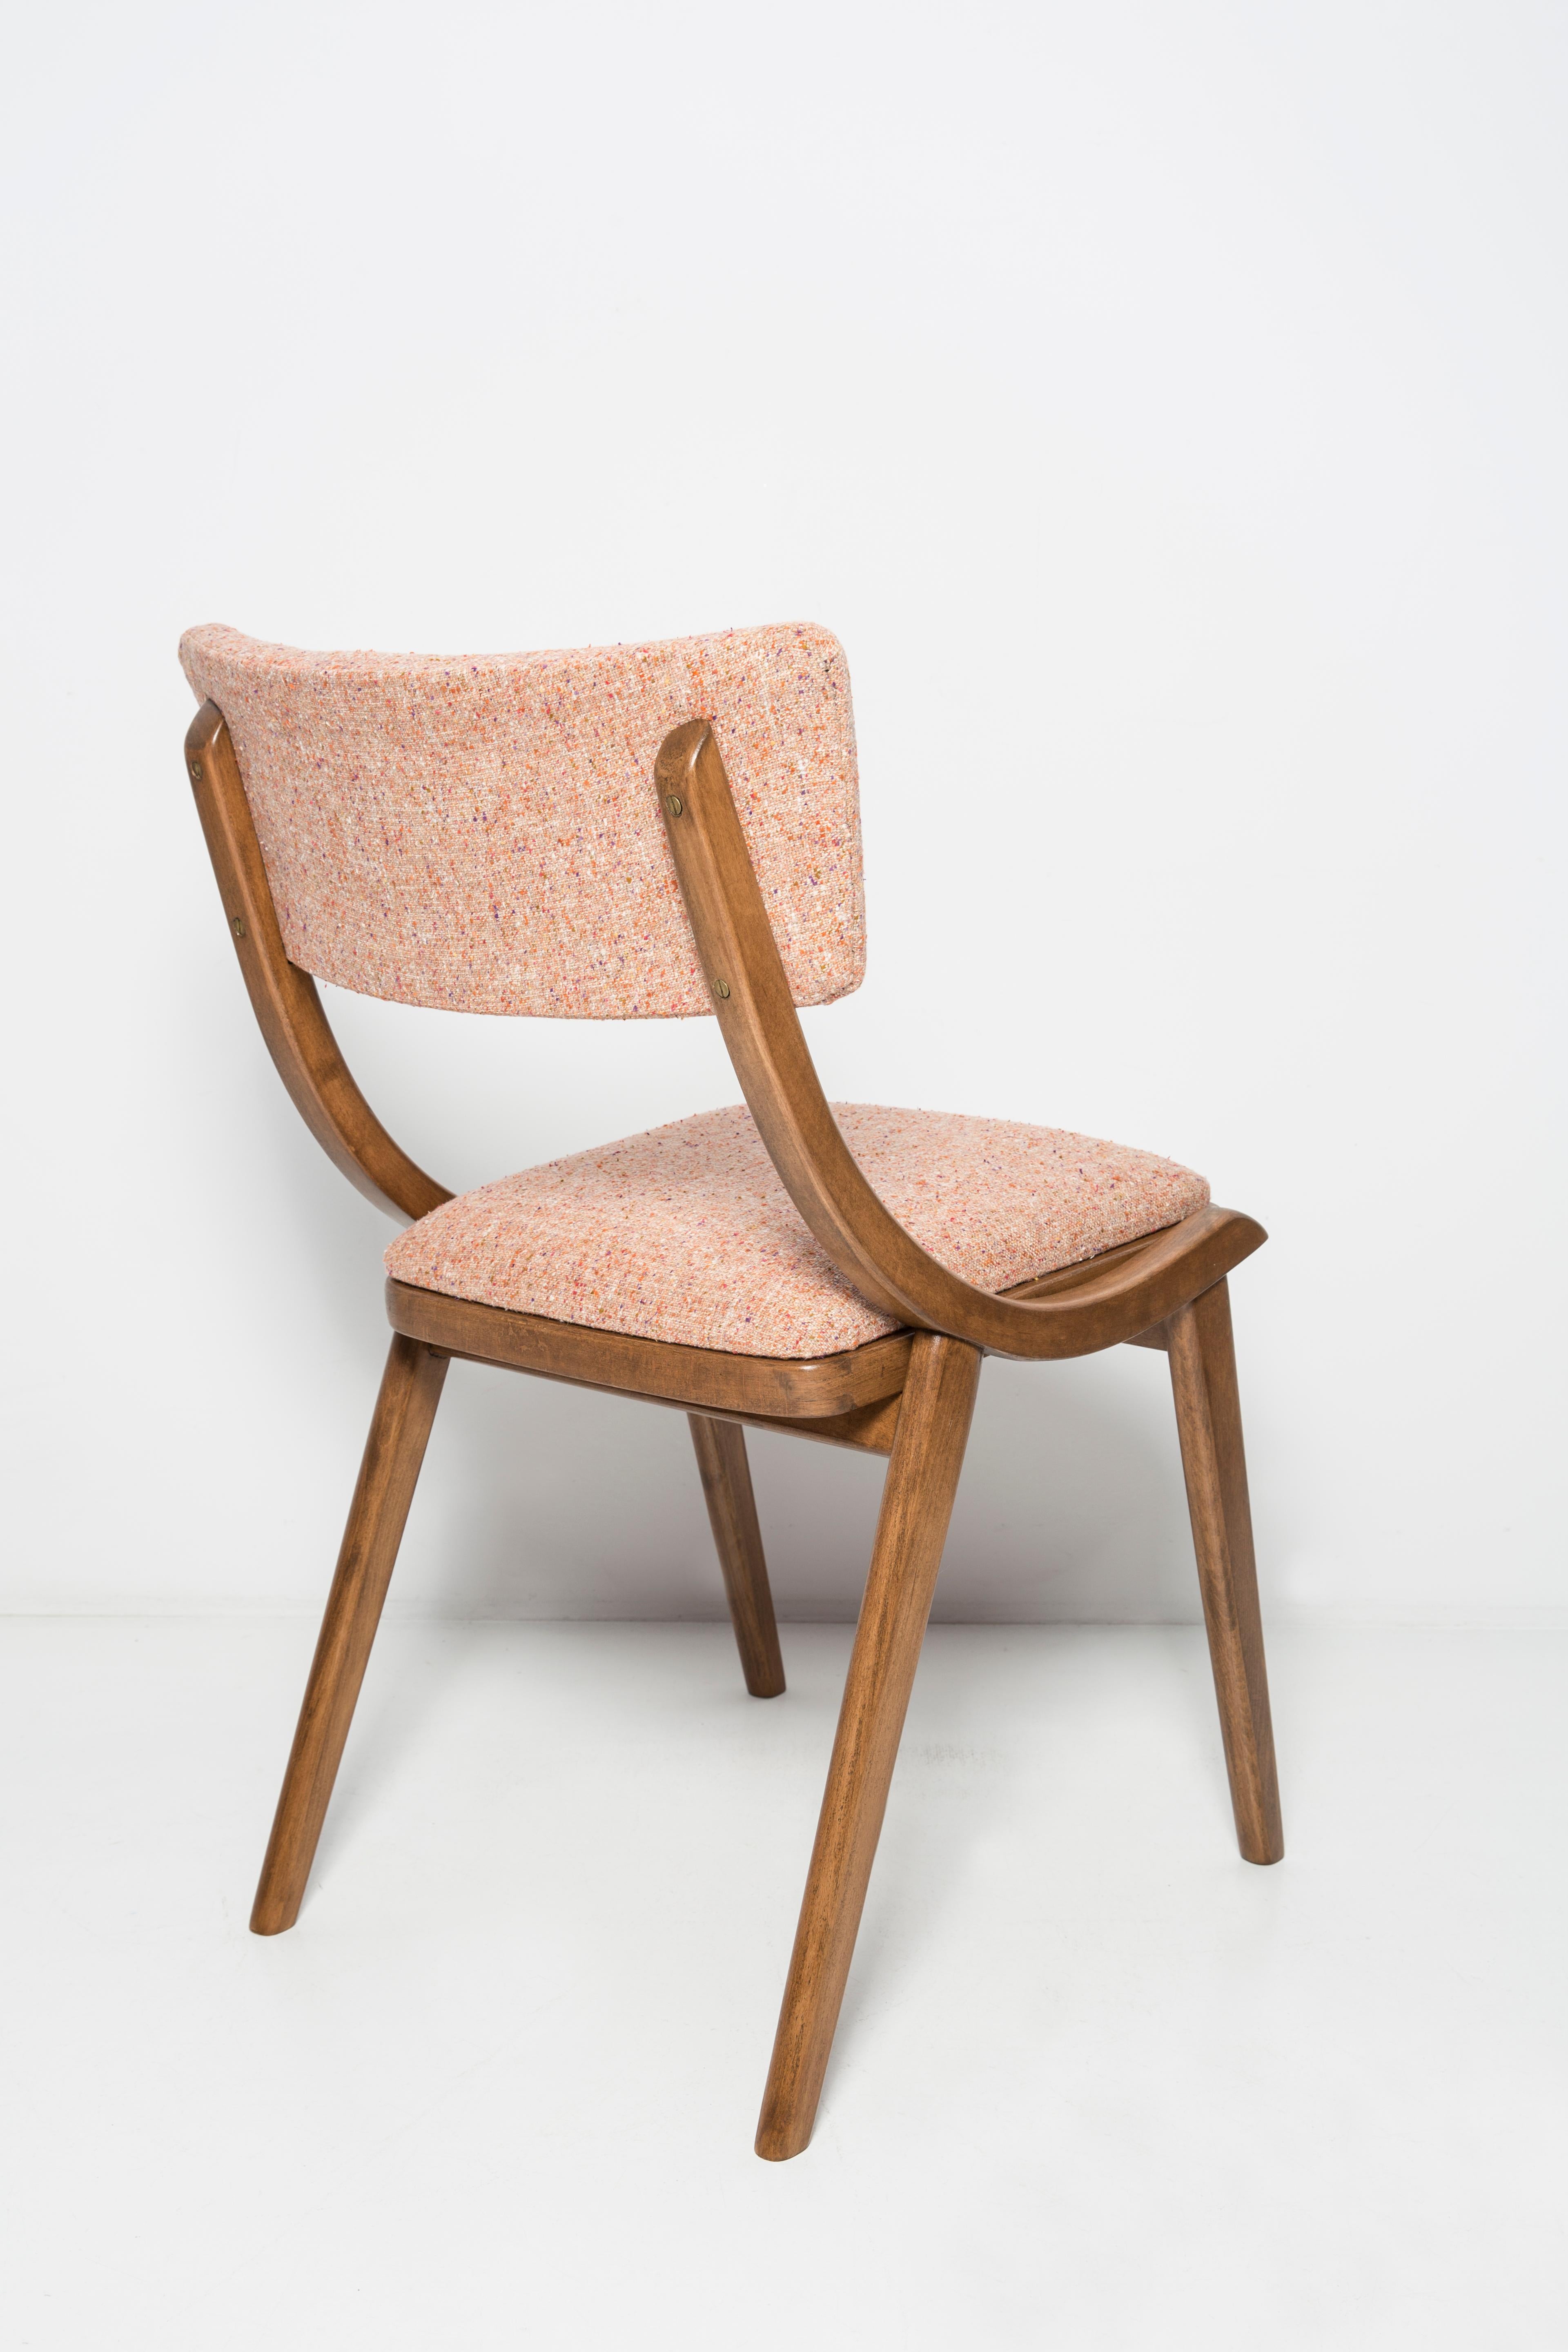 Polish Set of Four Mid Century Modern Bumerang Chairs, Peach Orange Wool, Poland, 1960s For Sale